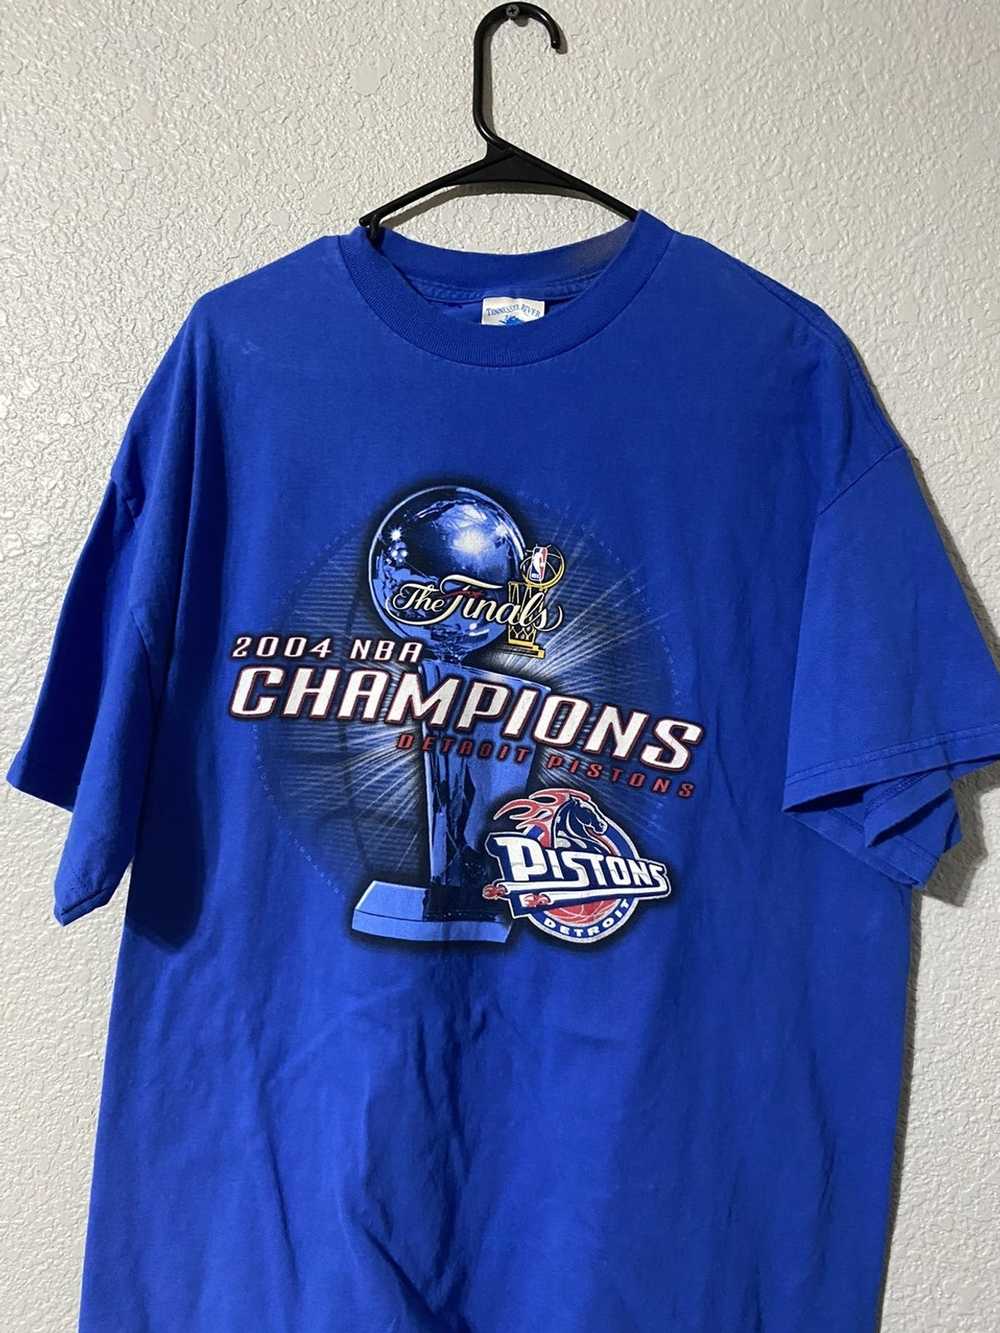 Vintage 2004 NBA Champions Detroit Pistons - XL - image 1